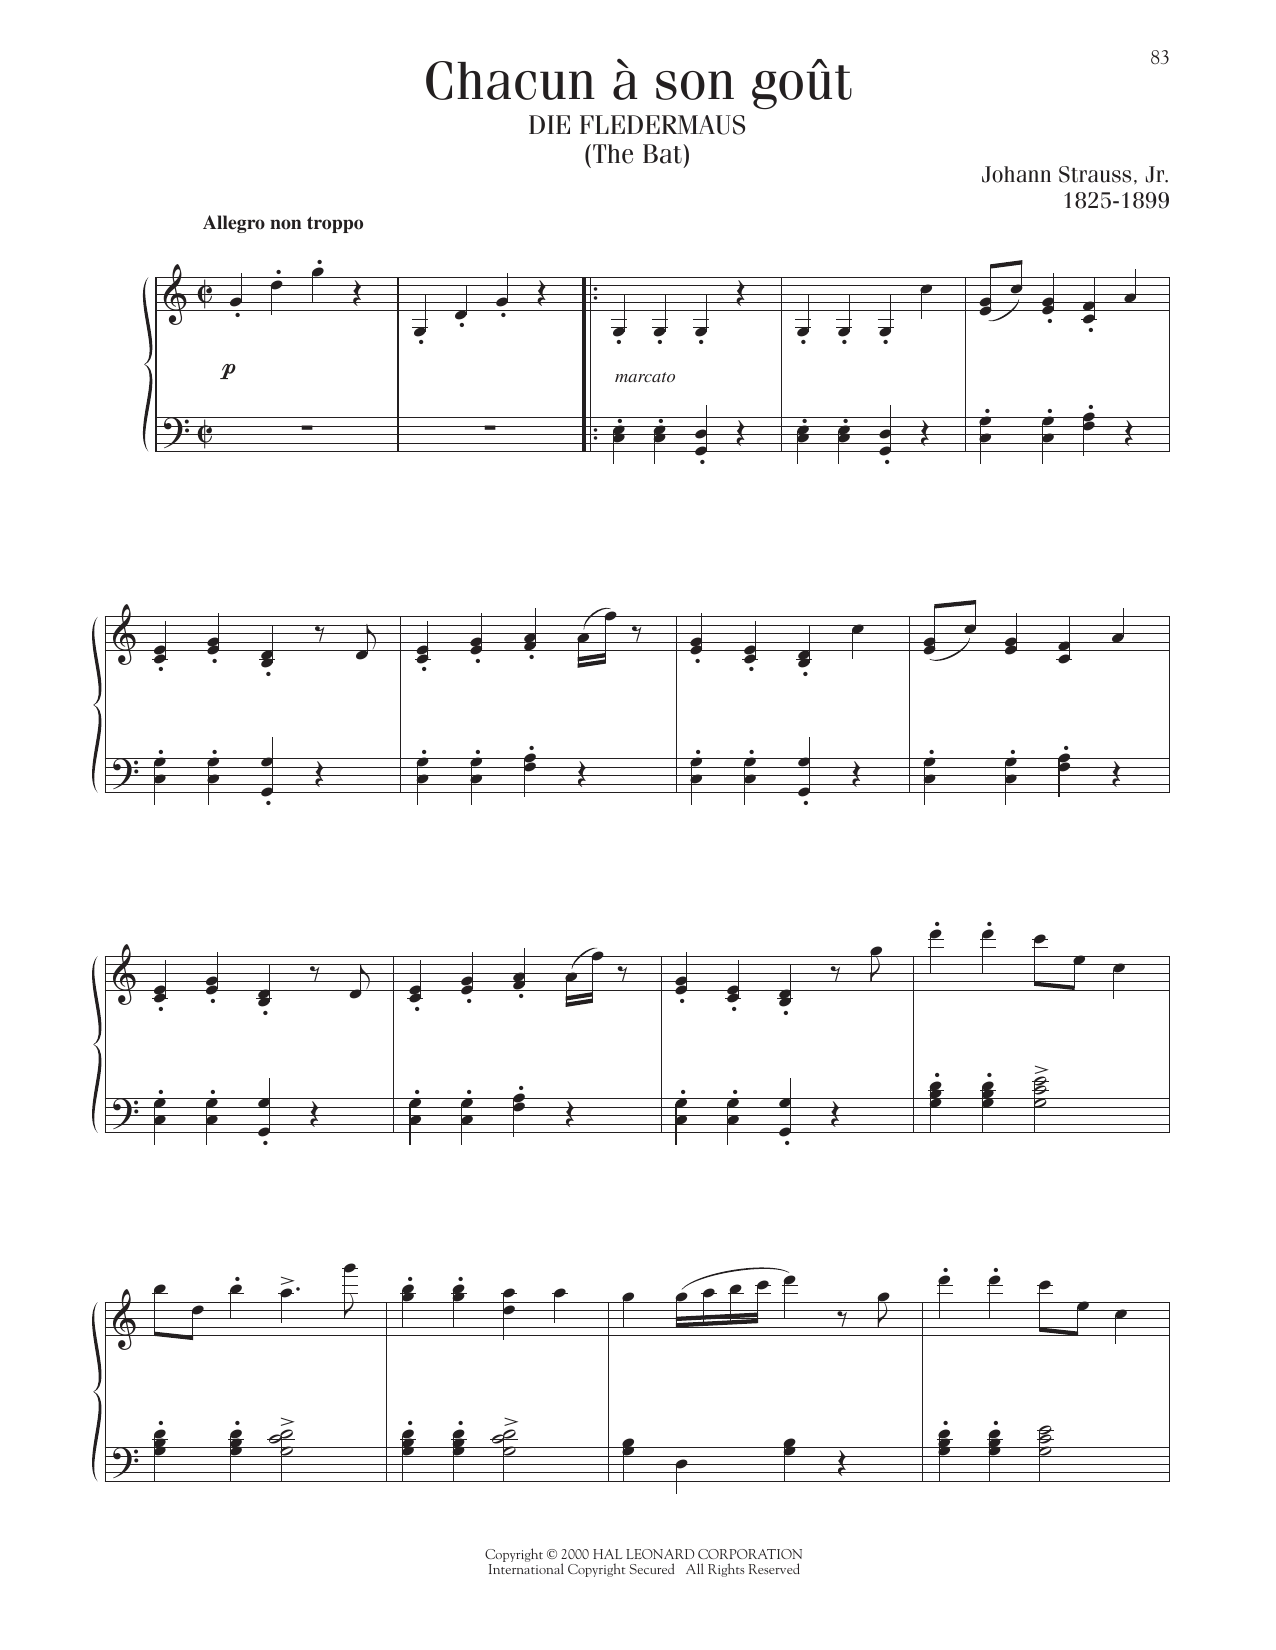 Johann Strauss II Chacun A Son Gout sheet music notes printable PDF score